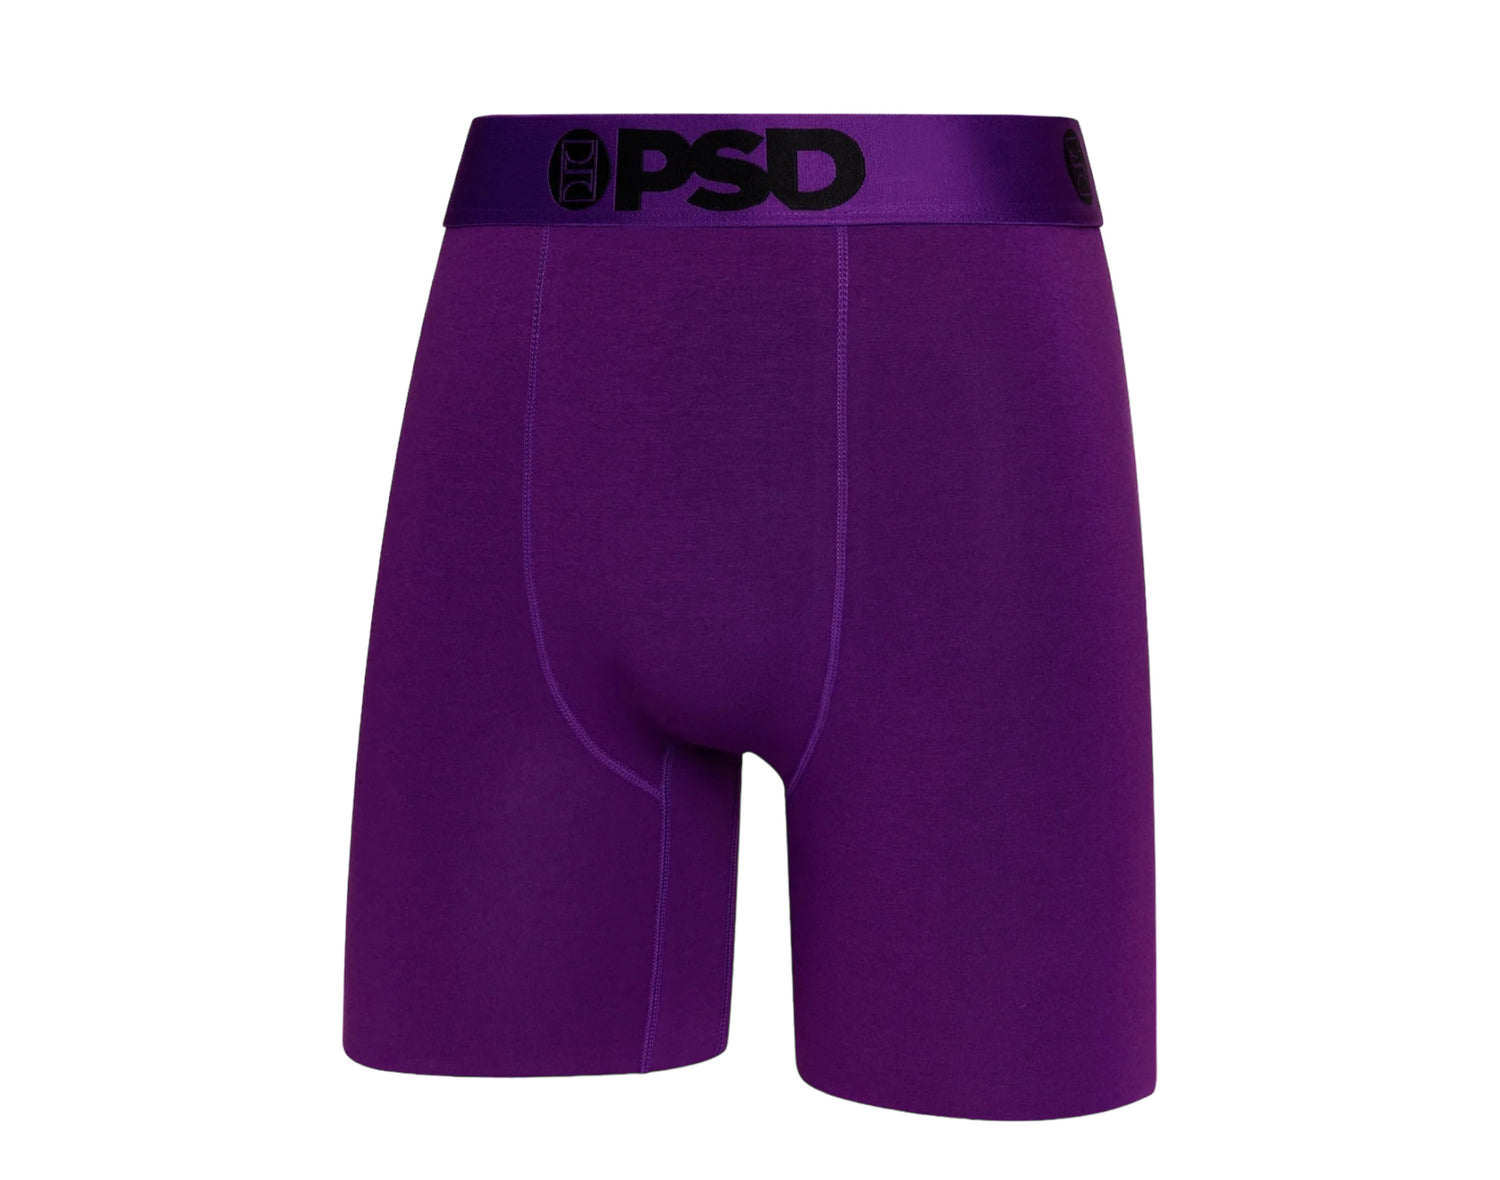 PSD Solids 7" Cotton 3-Pack Boxer Briefs Men's Underwear